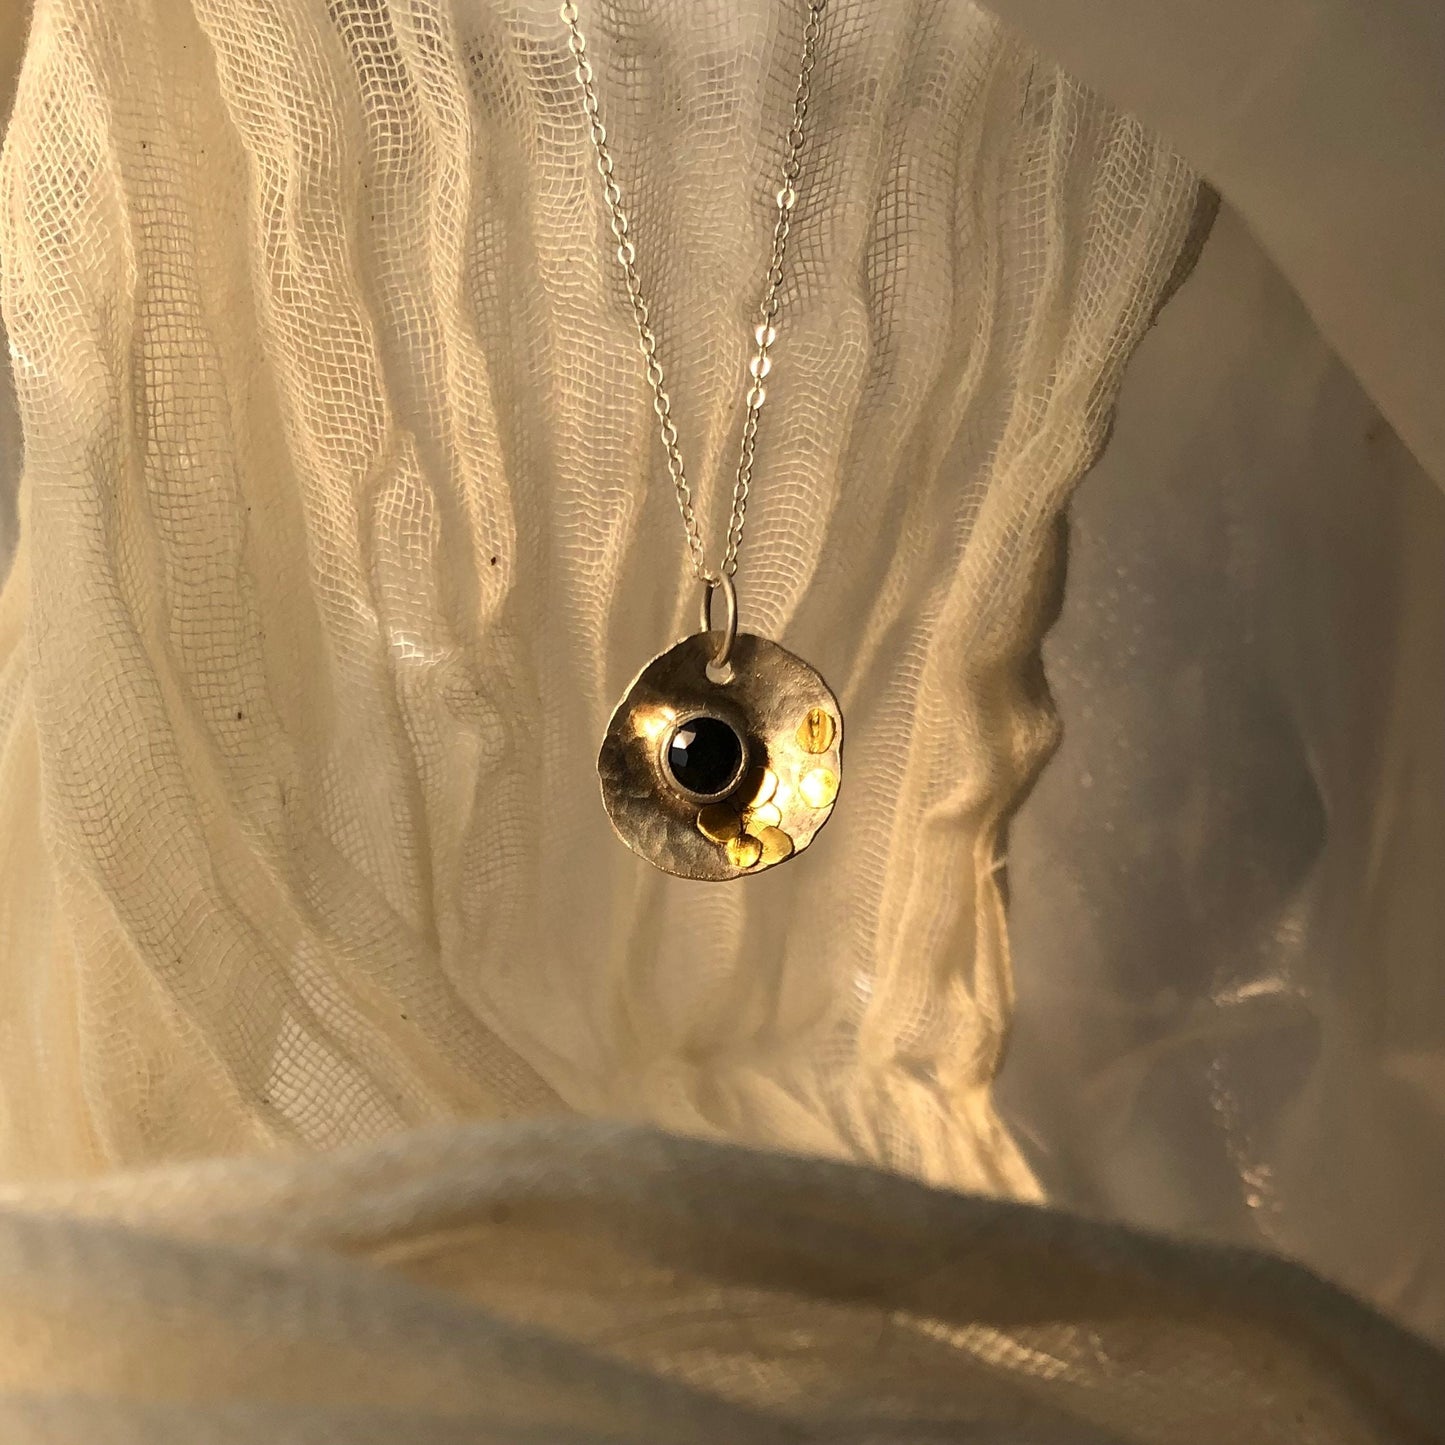 Sapphire pendant in argentium silver and 24 karat gold